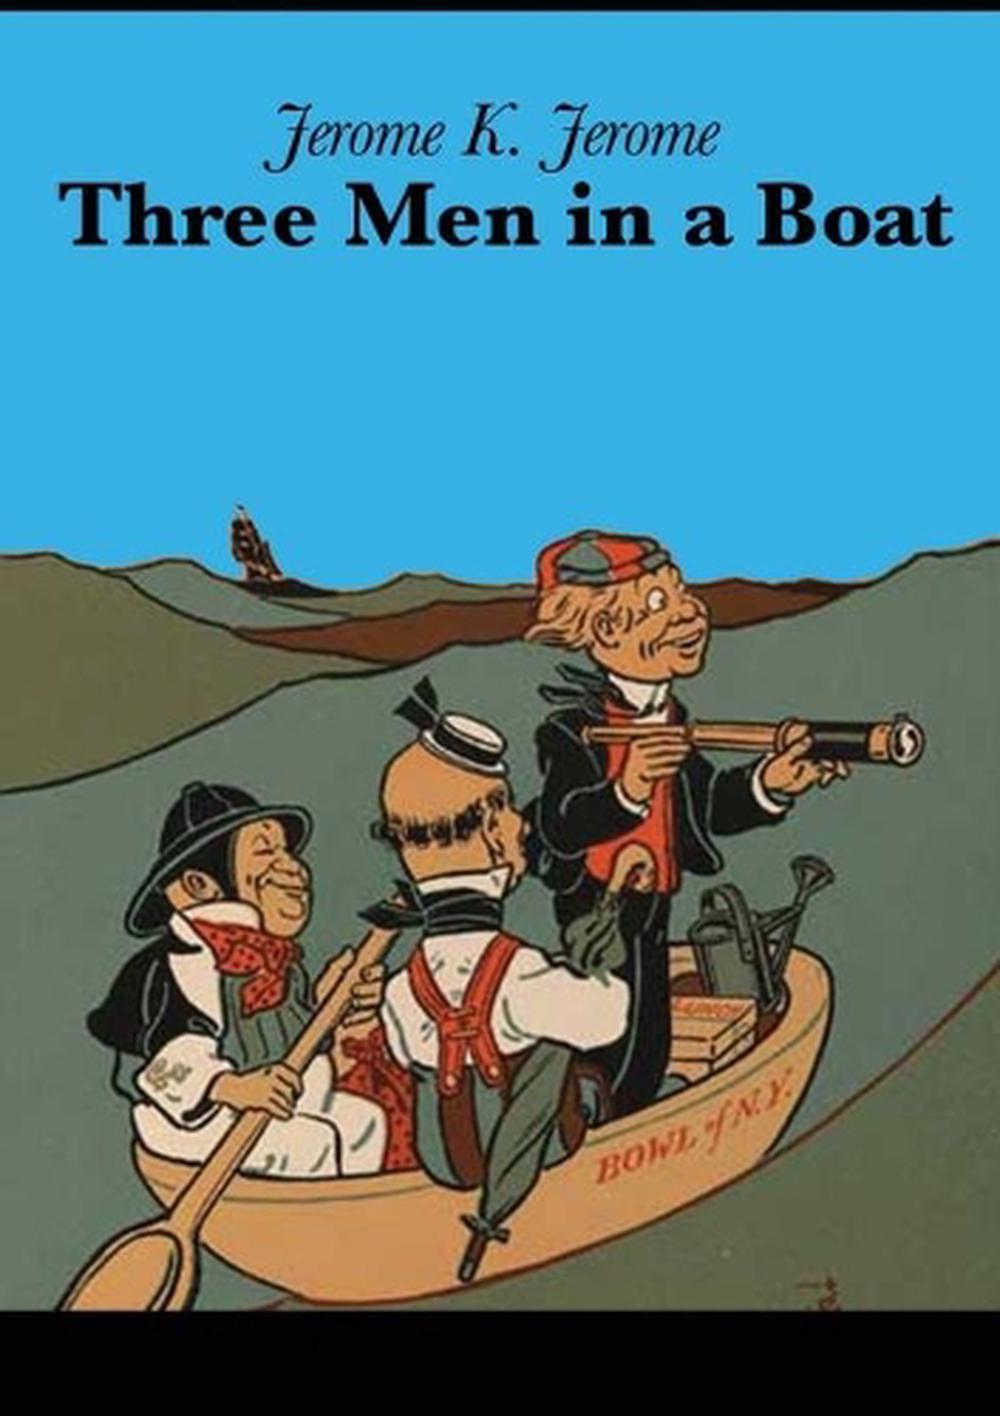 three men in a boat jerome k